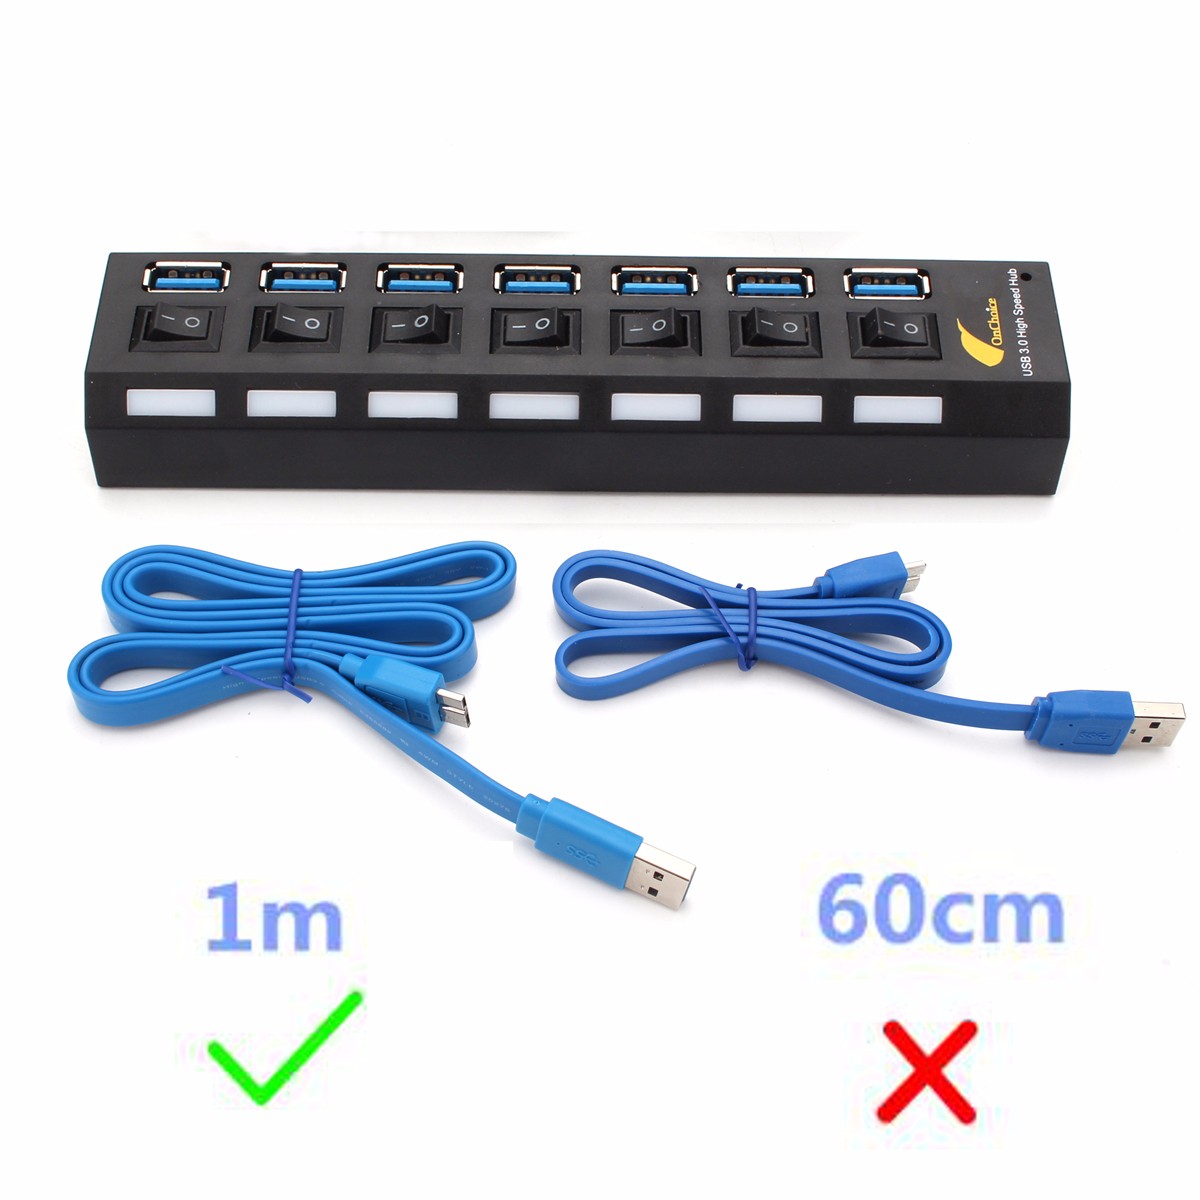 ONCHOICE 7Port USB 3.0 Hub On/Off Switch EU US UK AC Power Adapter For Laptop Desktop 40